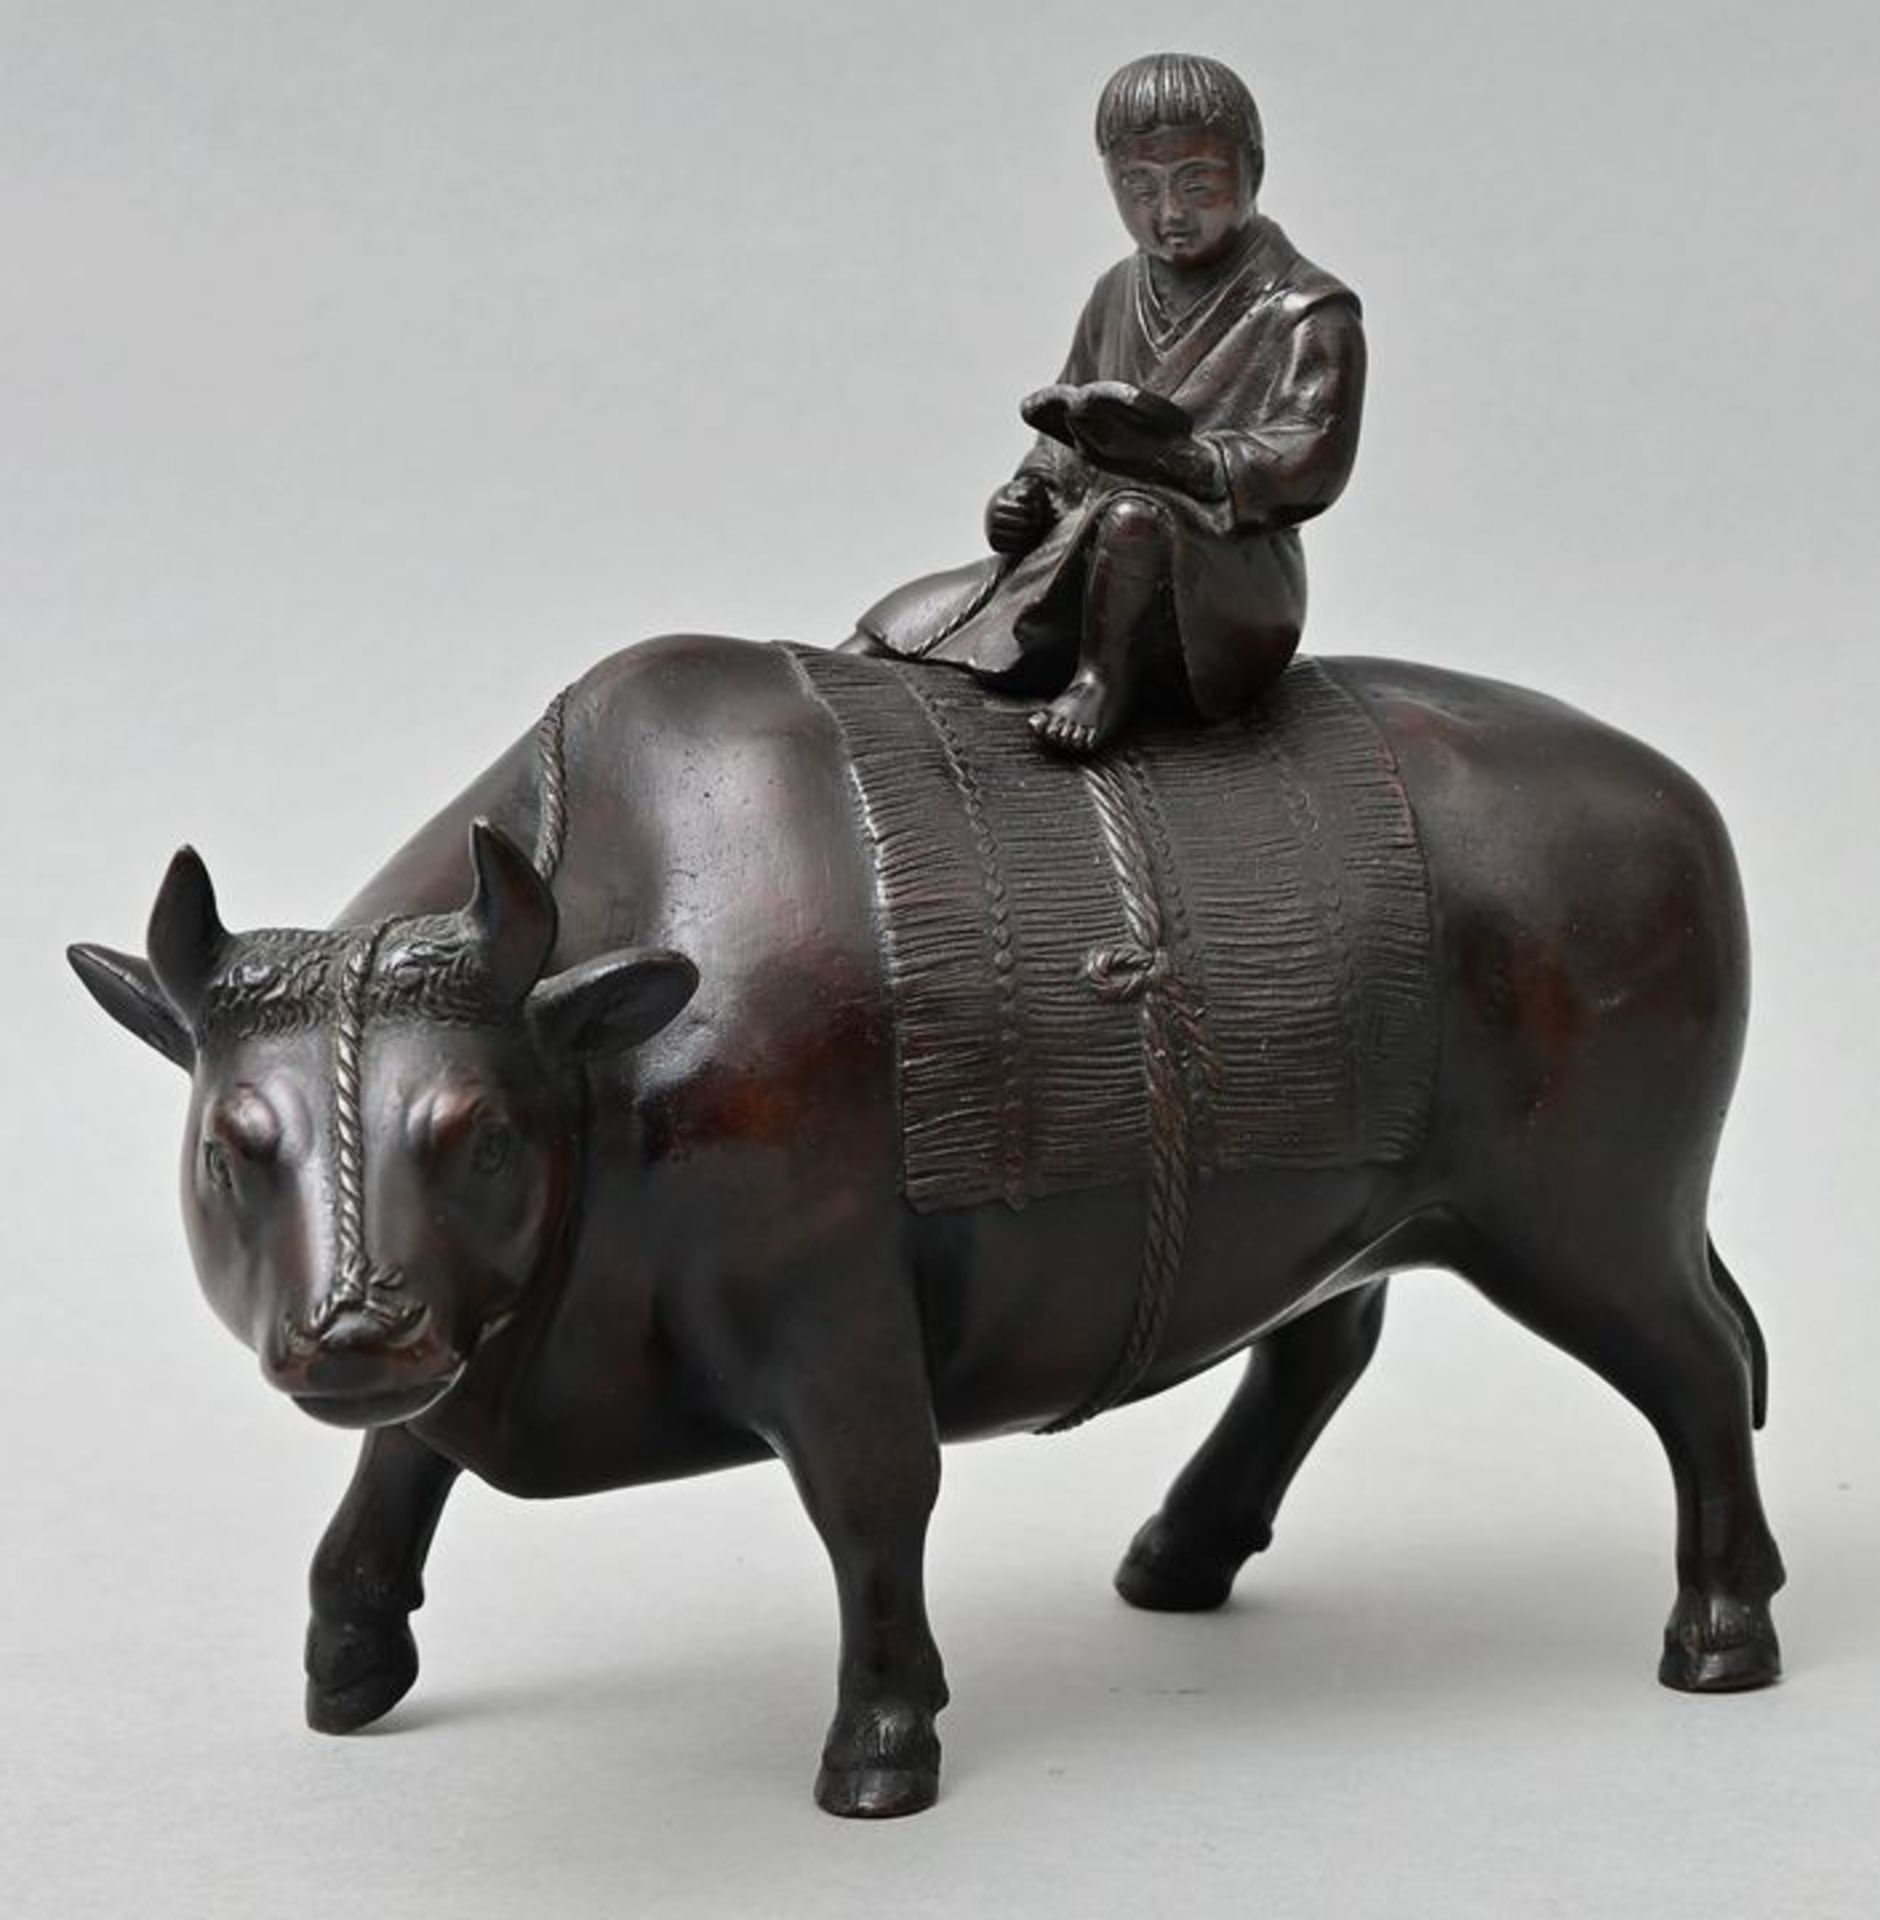 Junge auf Wasserbüffel/ boy riding on a water buffalo